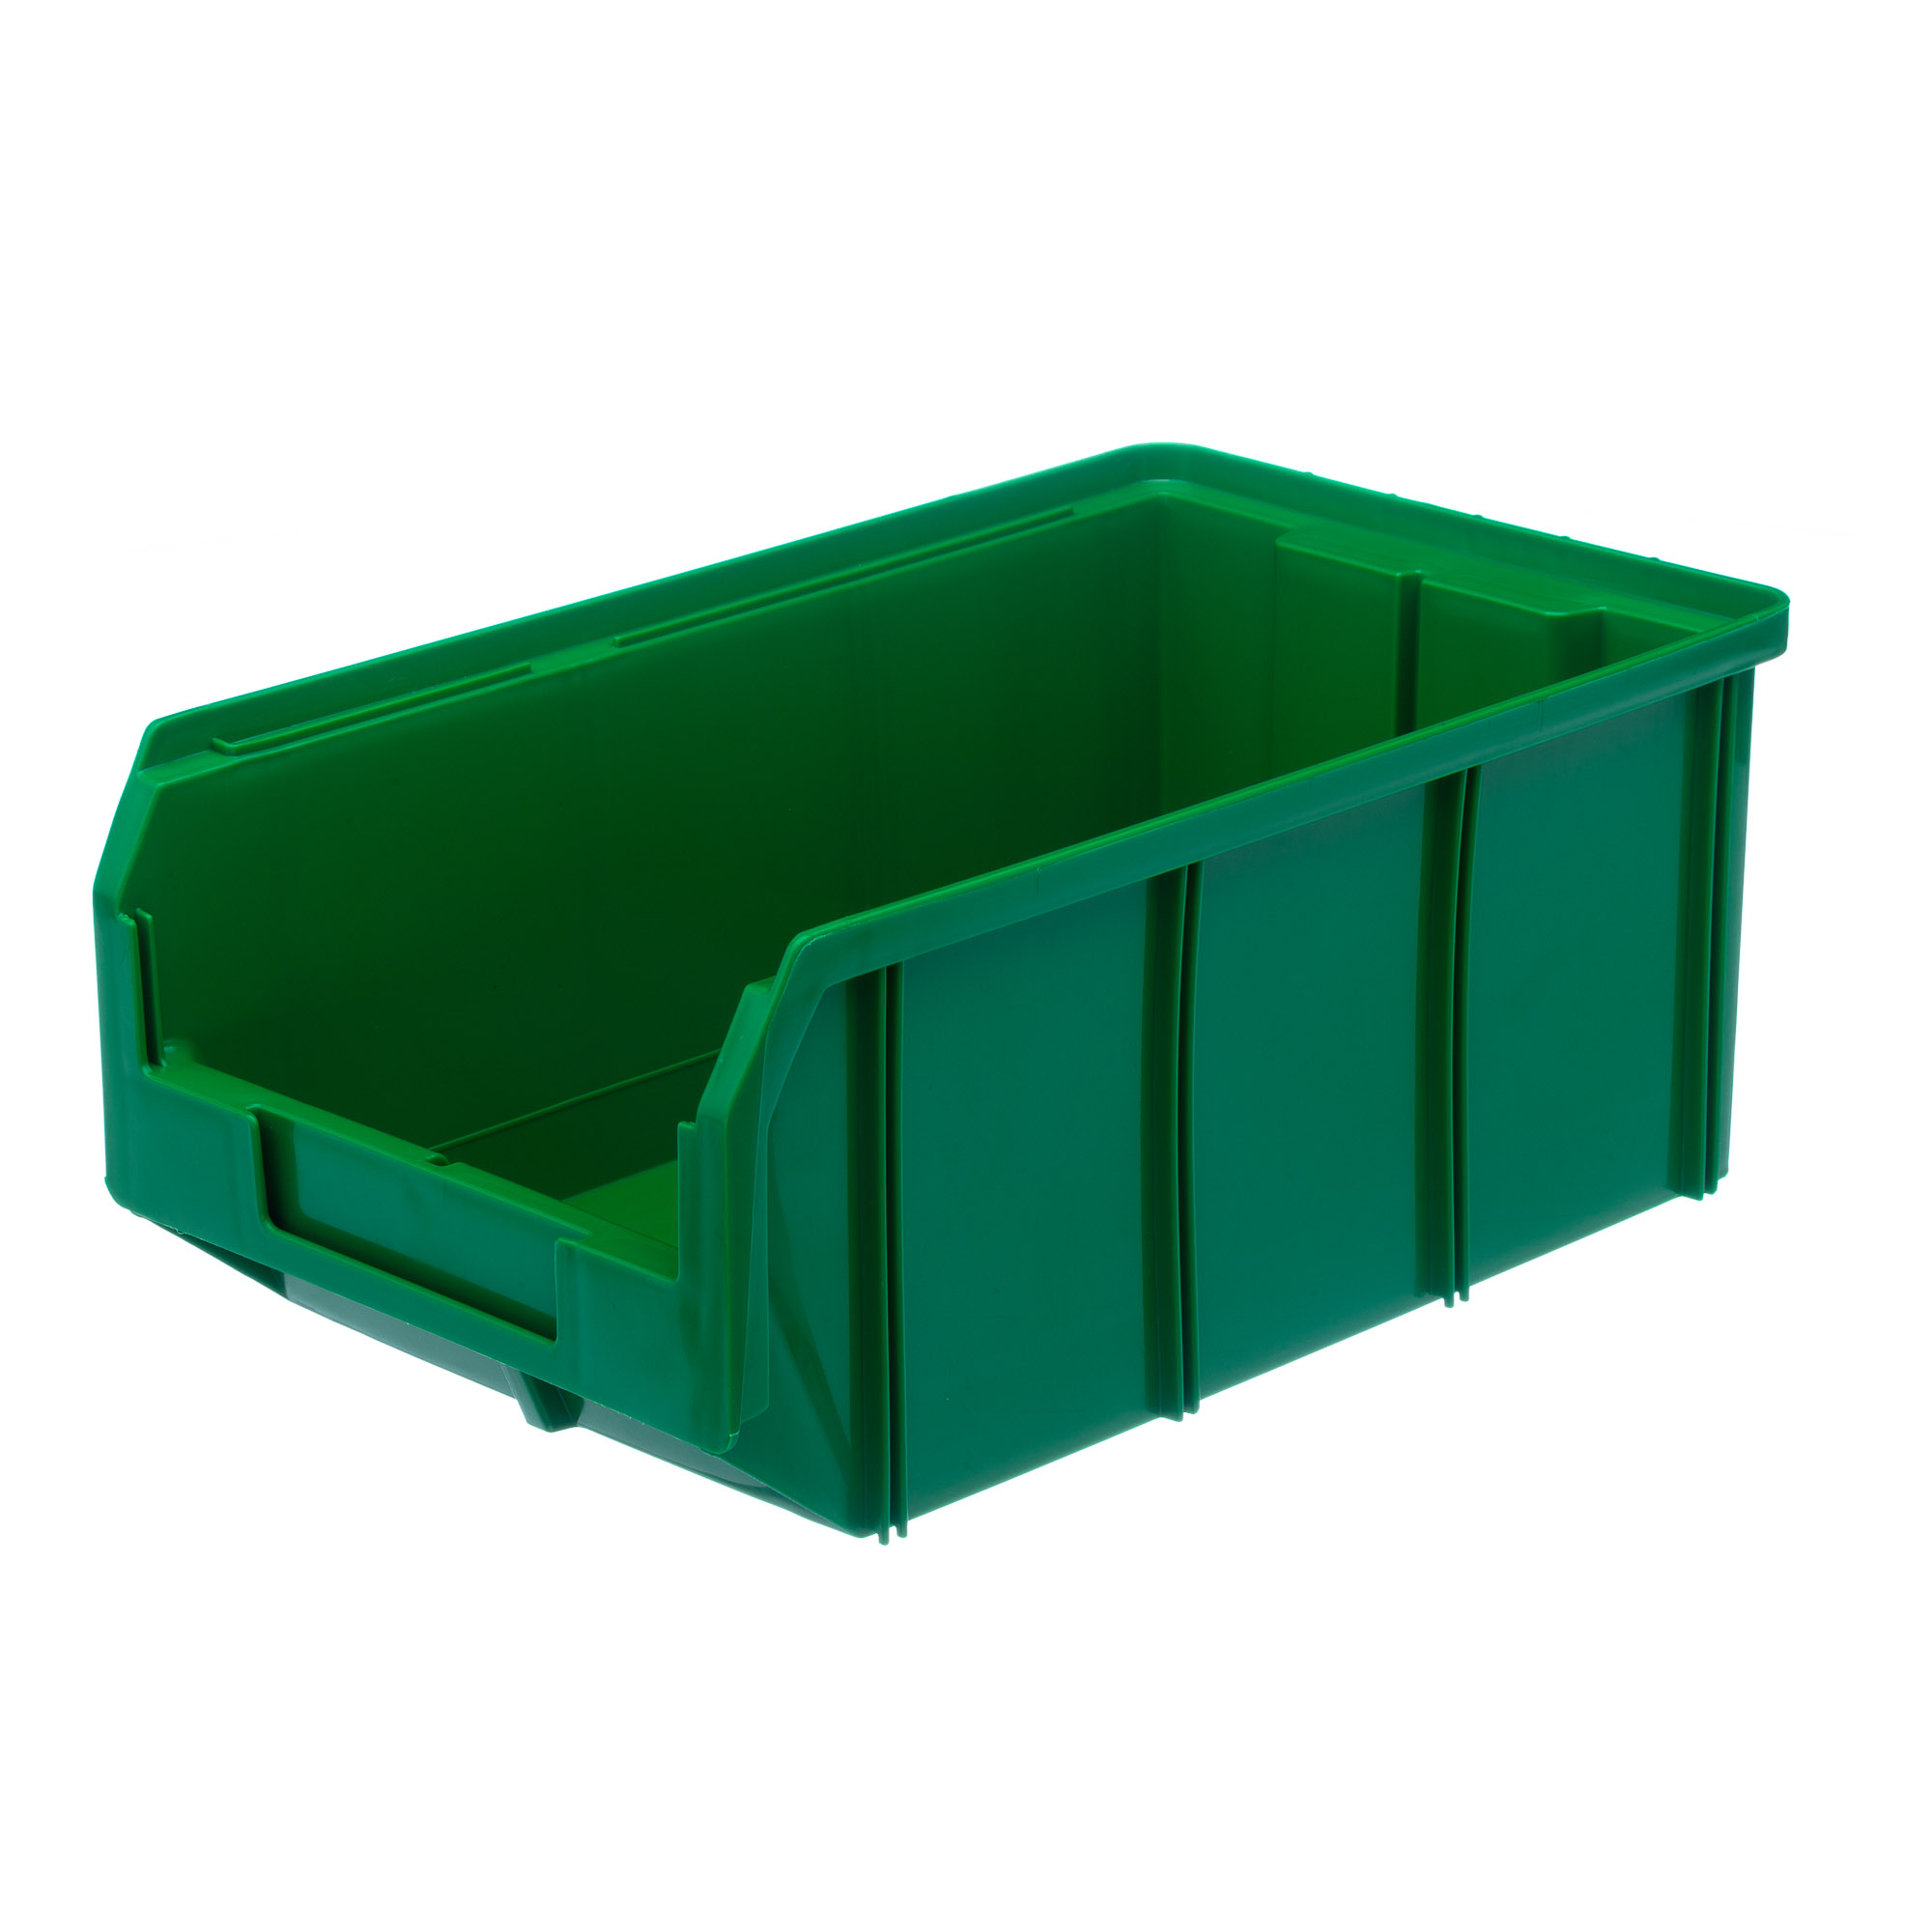 Пластиковый ящик Стелла-техник V-3-зеленый 342х207x143мм, 9,4 литра мельница пластиковый механизм 115 мл 45 80 гр зеленый